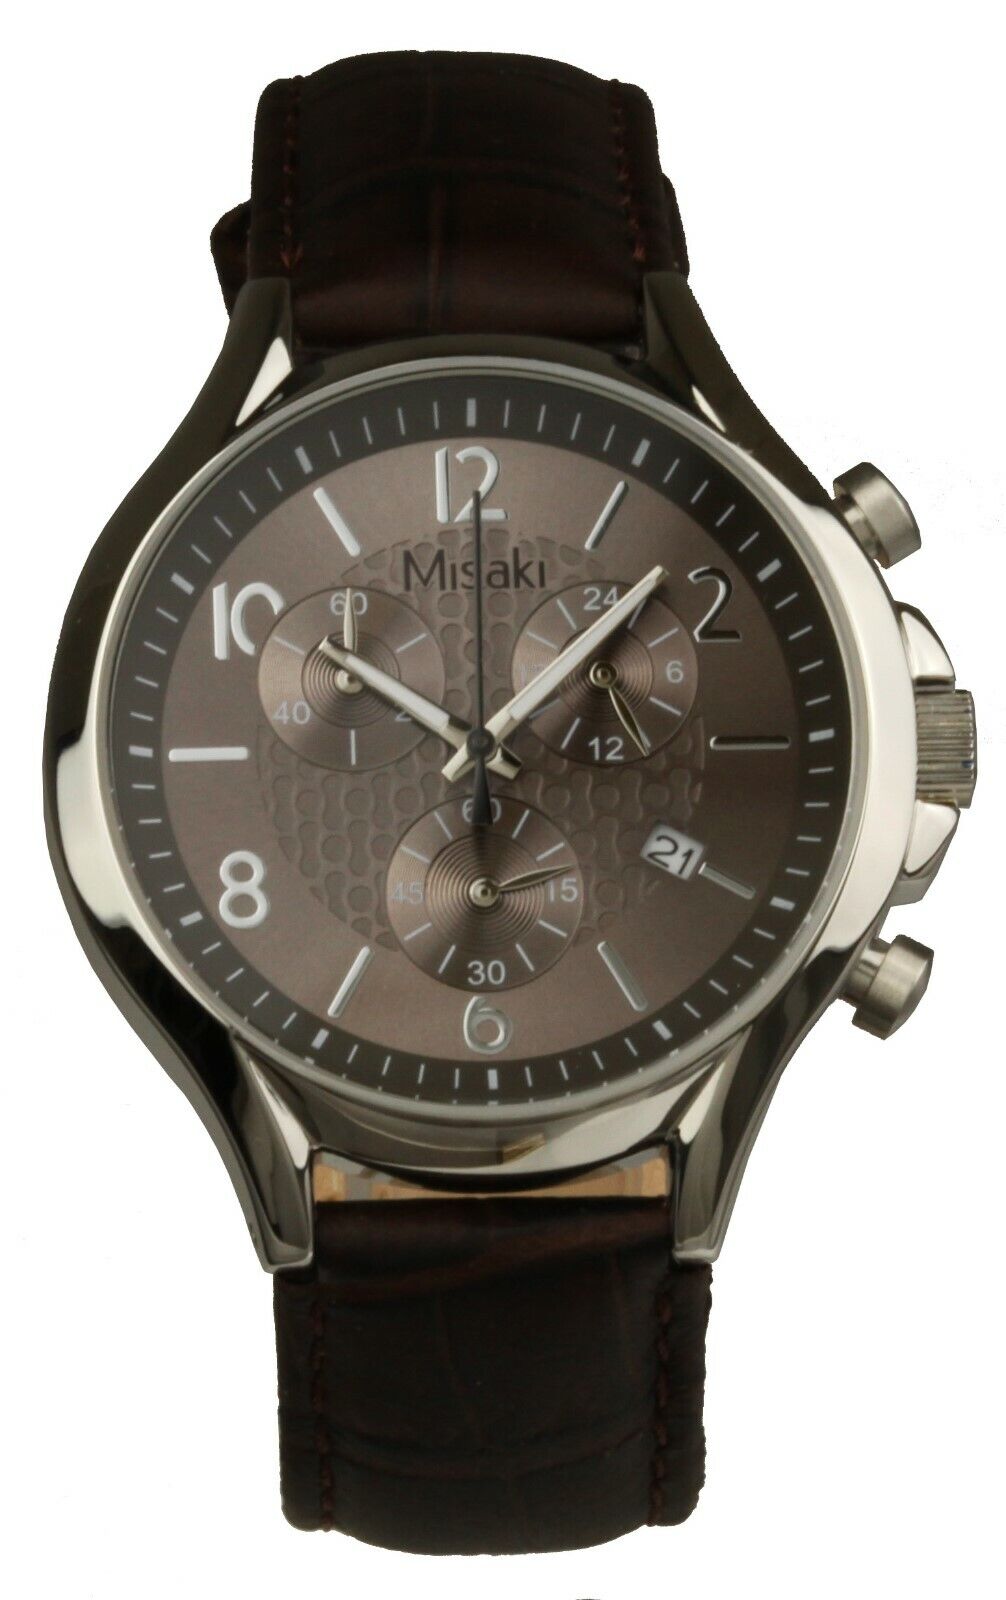 Misaki watch chronograph QCRWALPHA-Lnew original packaging - RRP 299€